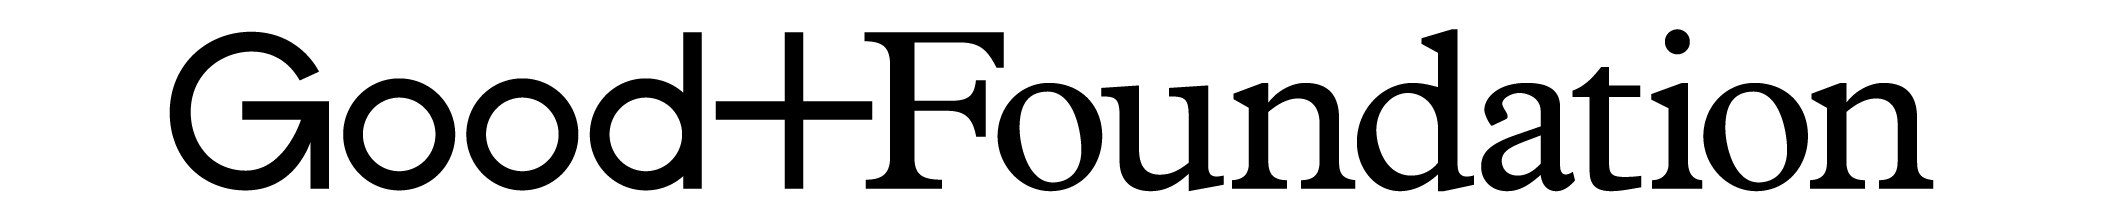 Good+Foundation logo